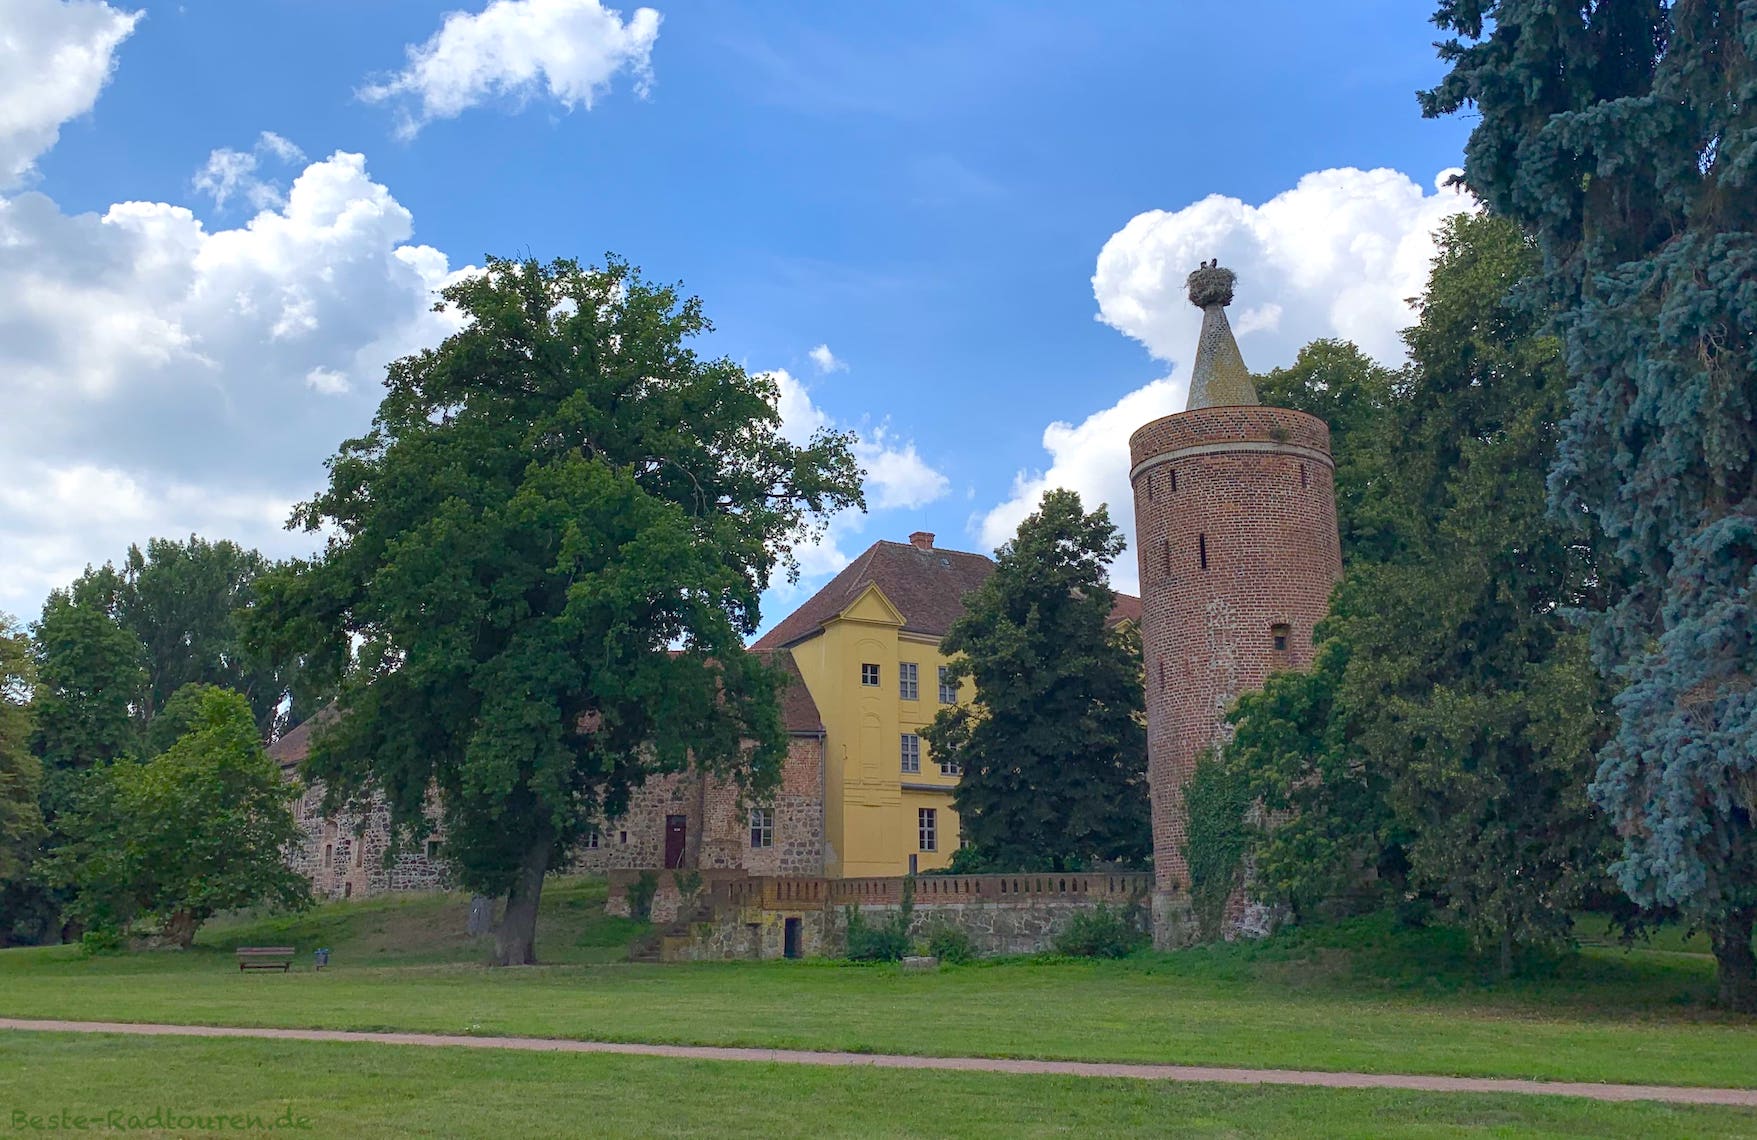 Foto vom Park her: Burg Ziesar, Storchenturm, Palas